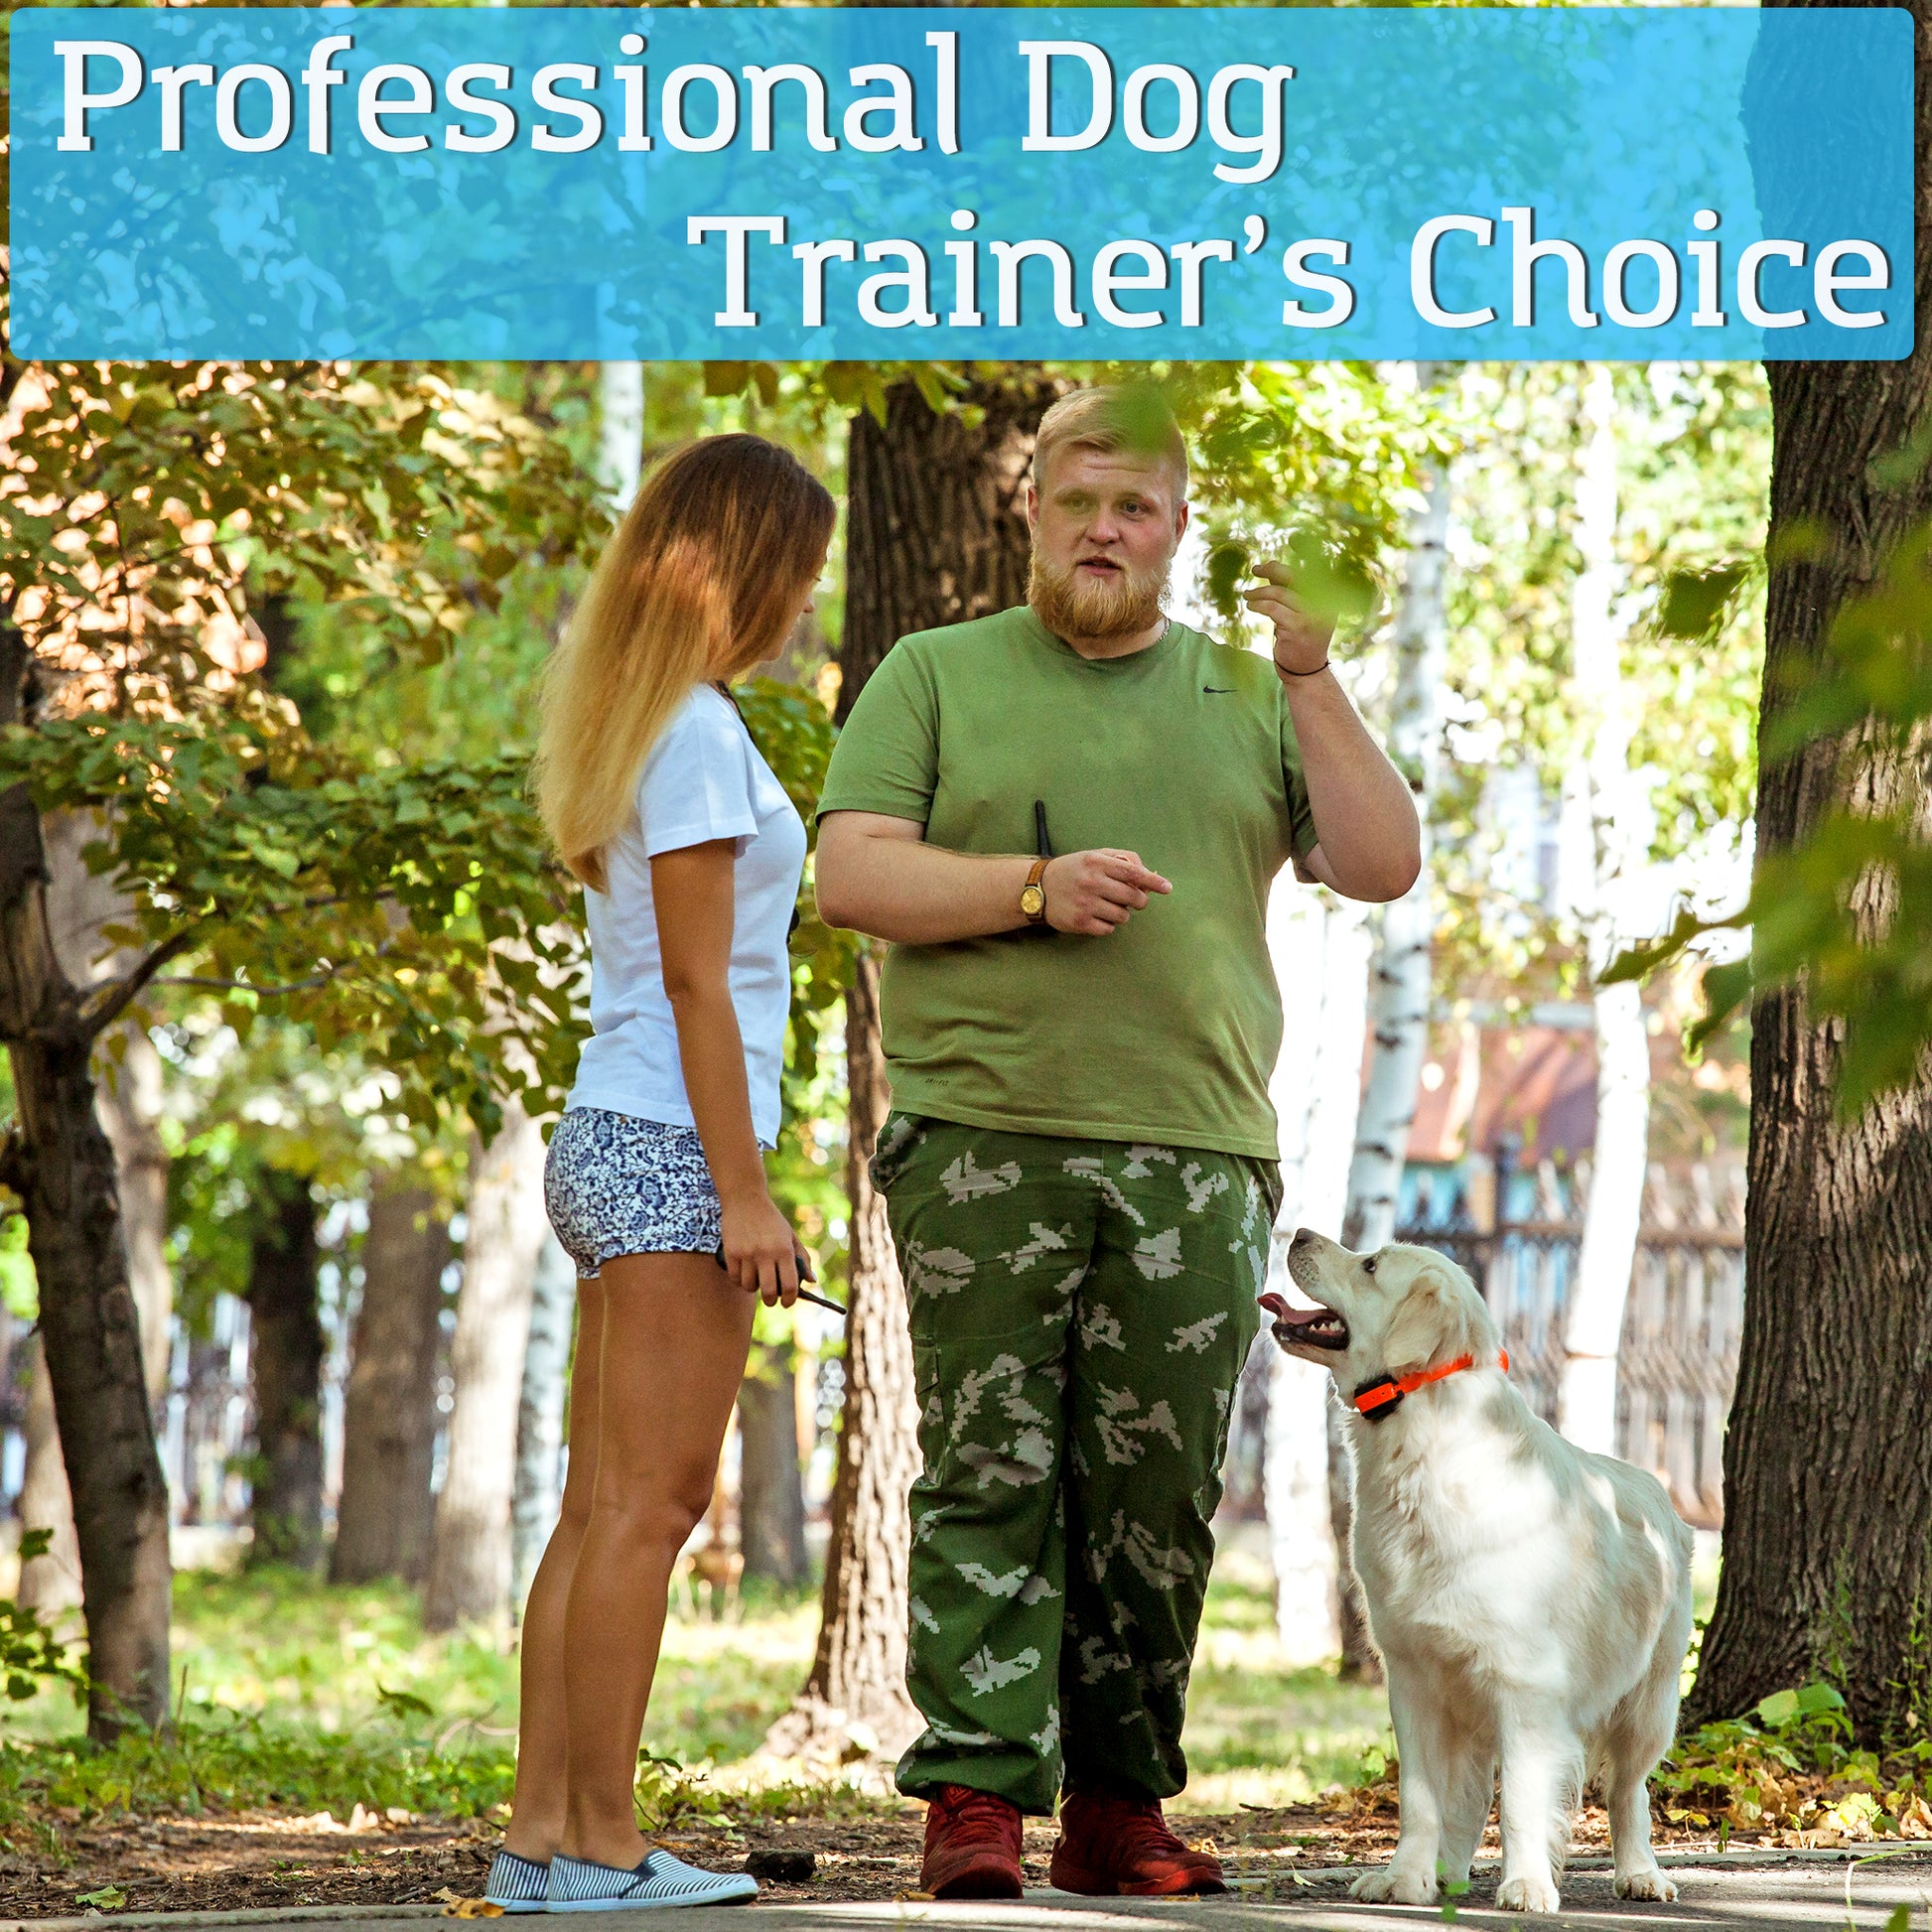 M686B Petspy premium dog training collar - professional dog trainer's choice